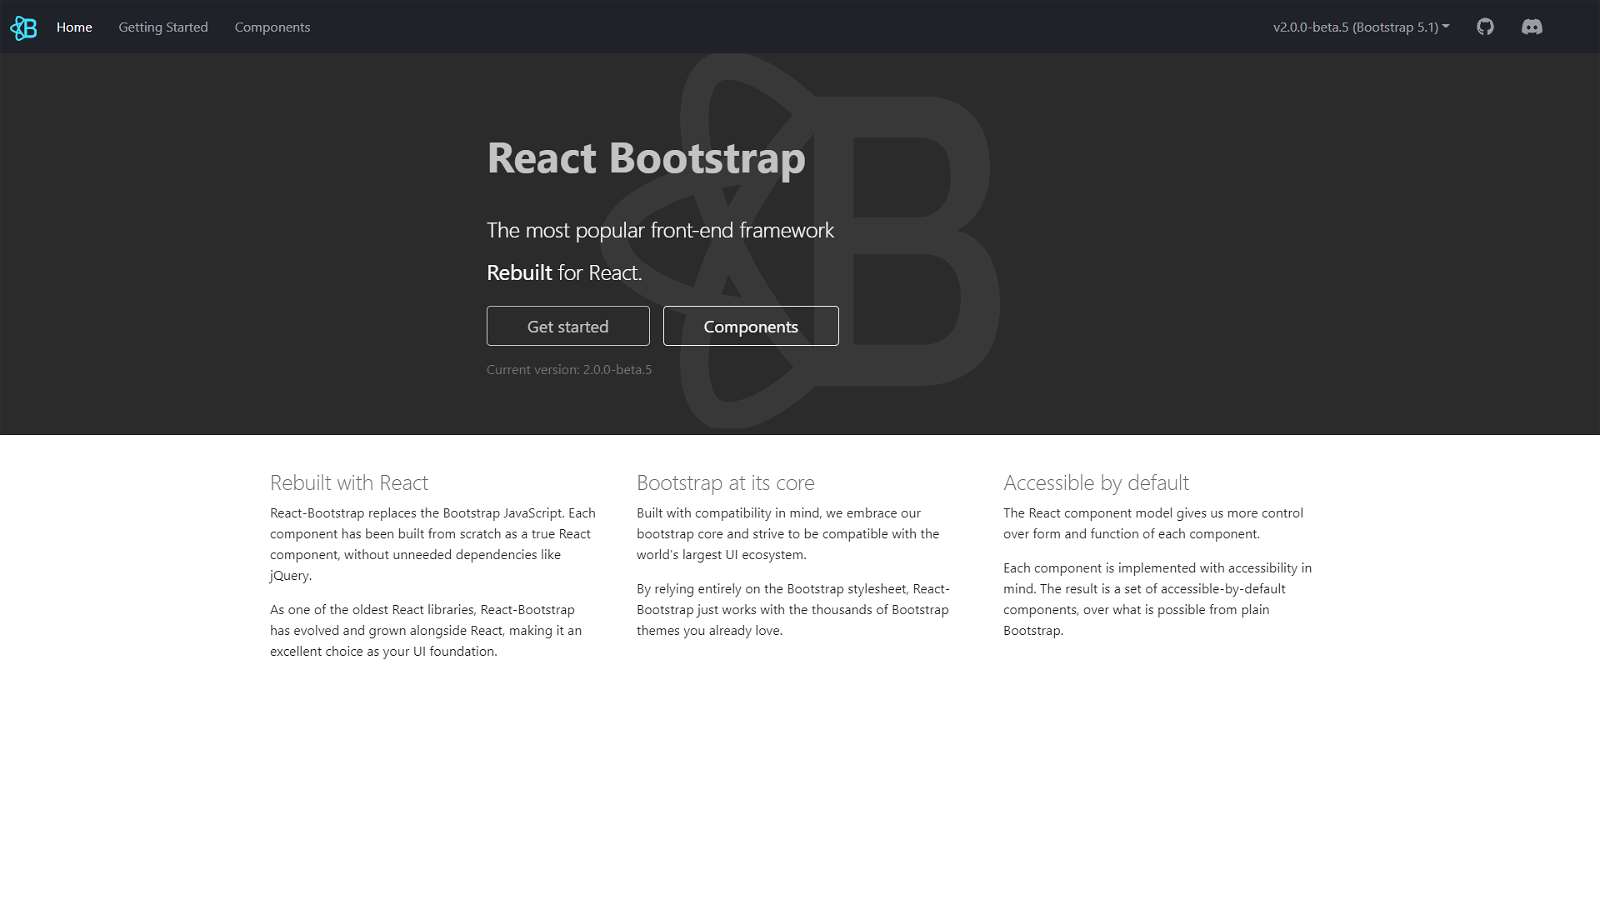 react-bootstrap